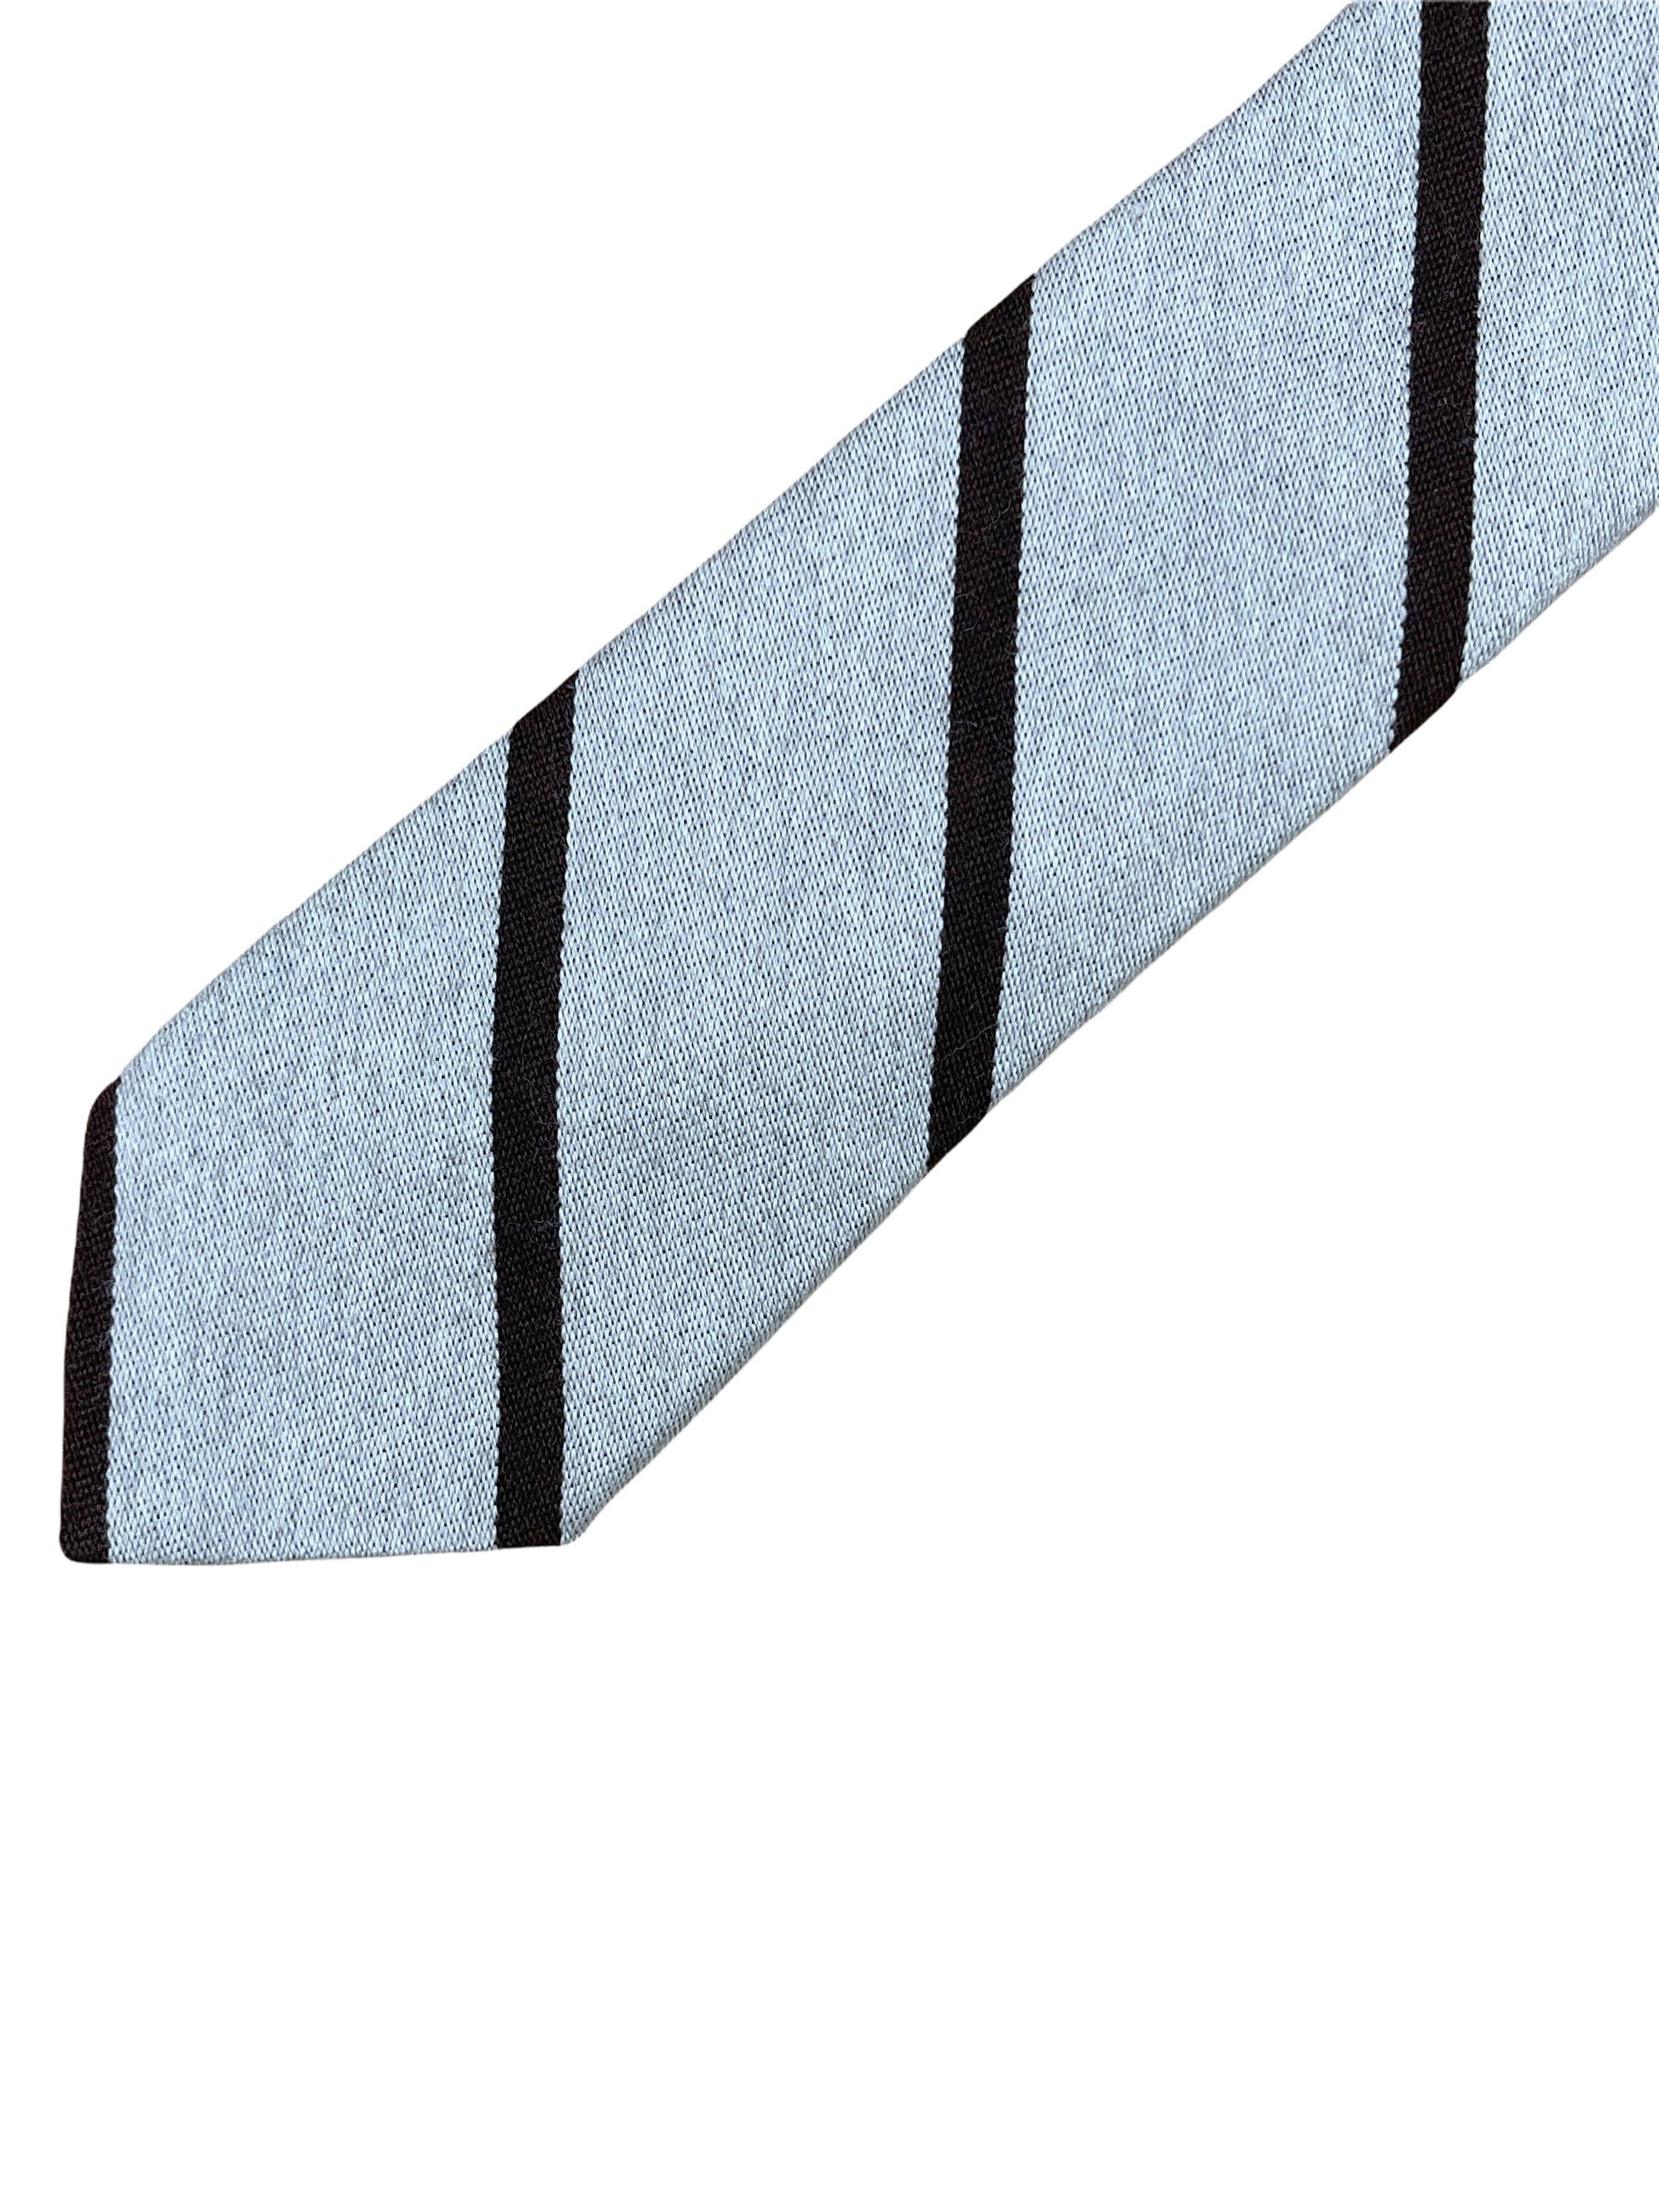 J.Crew Beige striped tie, Made in USA. Genuine Design luxury consignment 